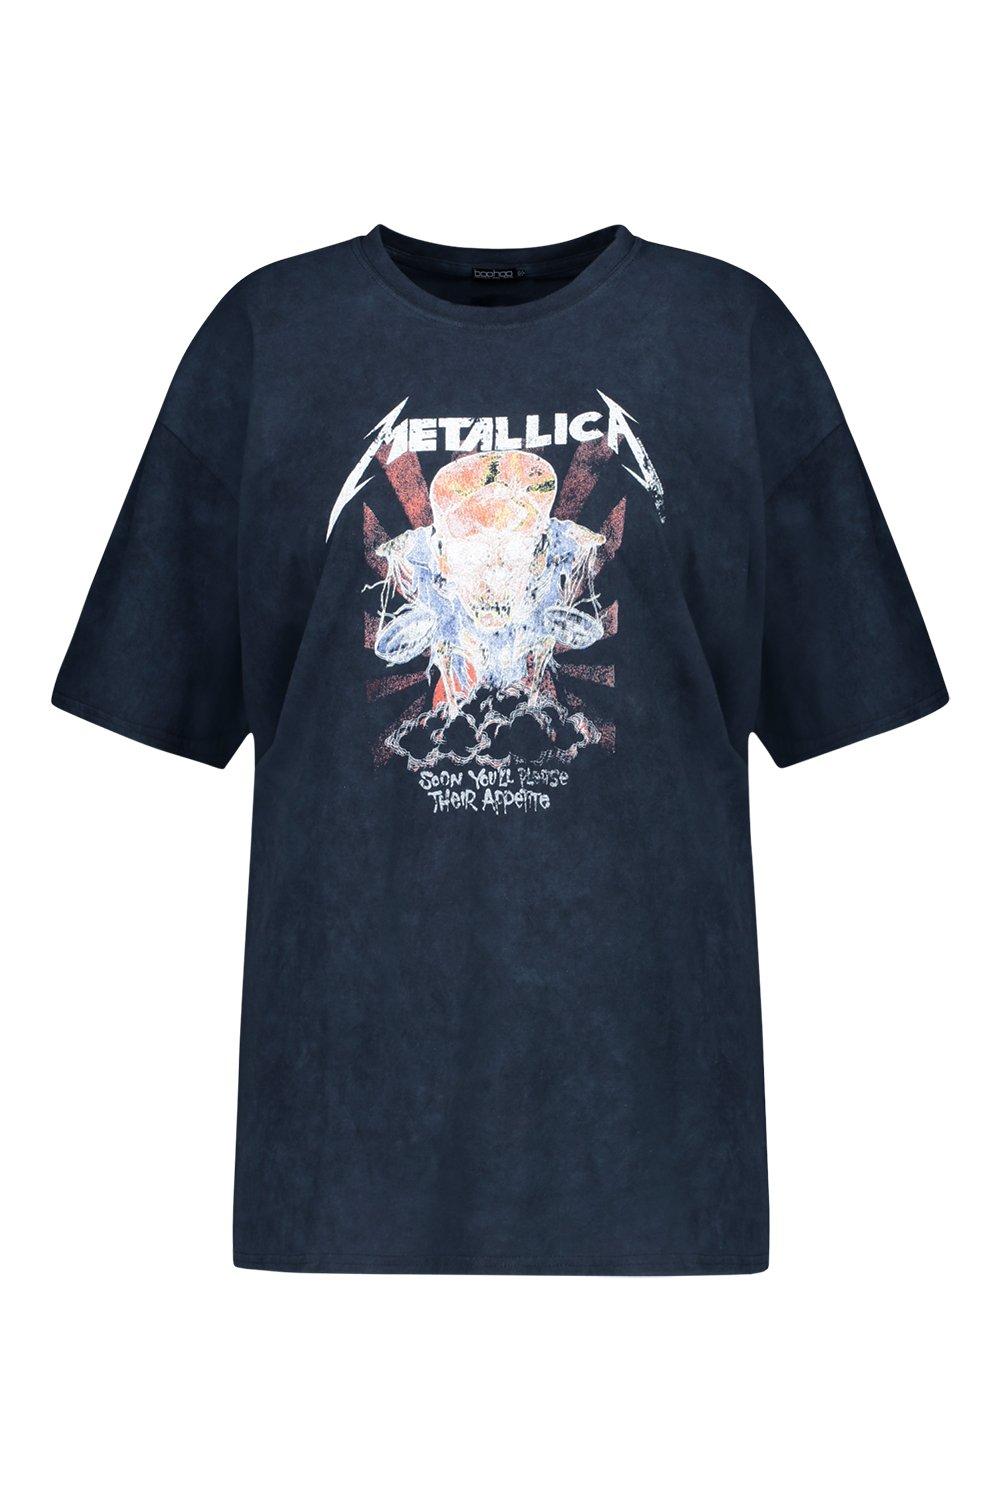 verdieping globaal Intens Plus Metallica Washed Band T-Shirt | boohoo